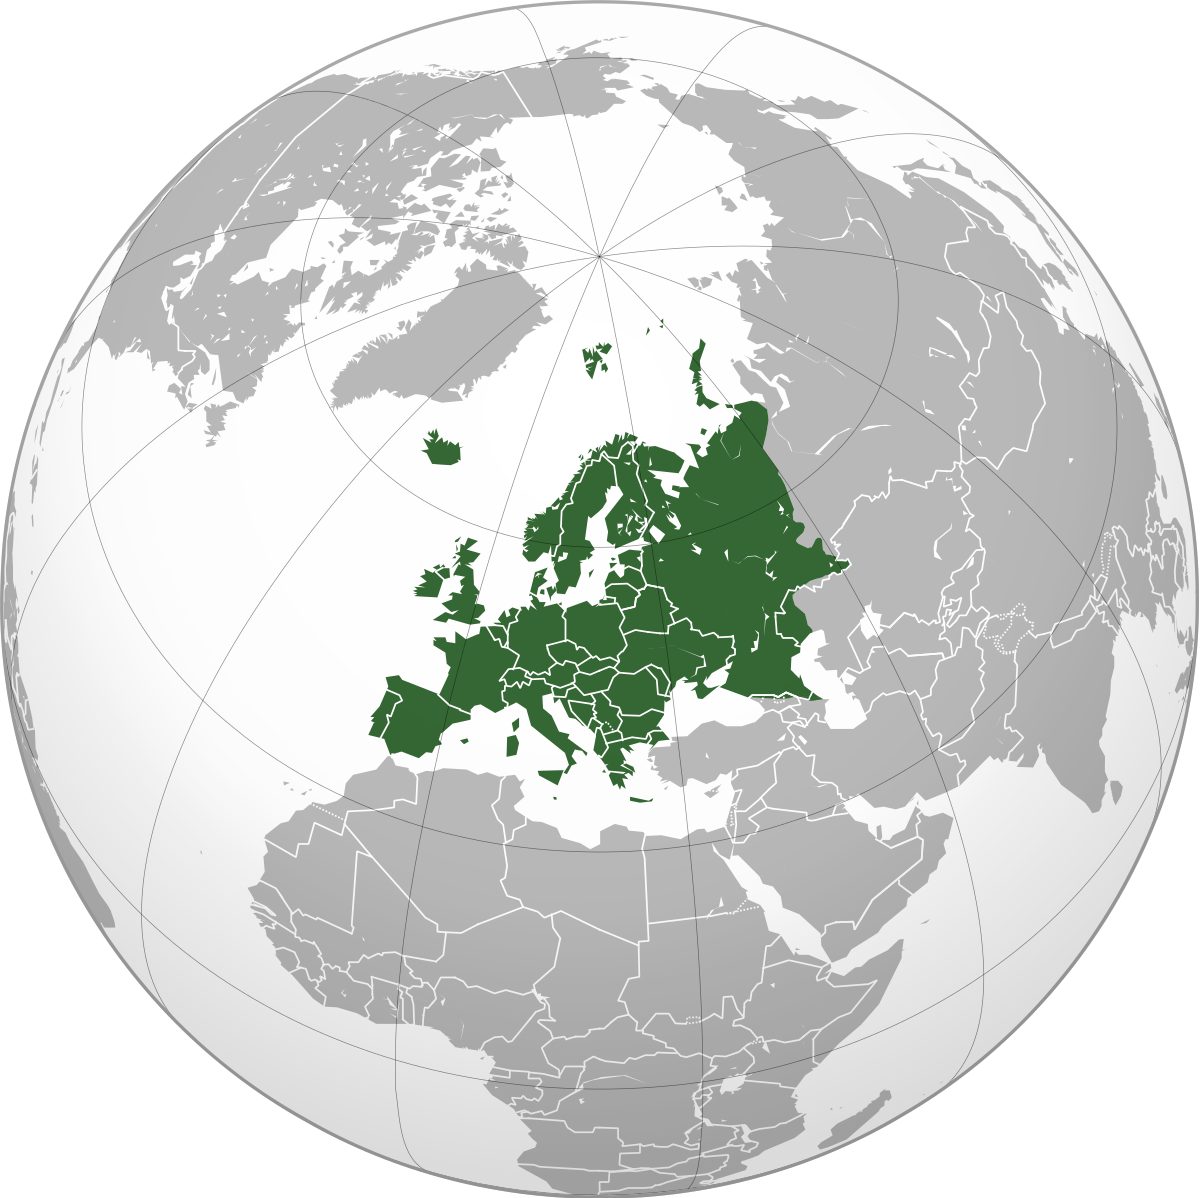 Europe - Wikipedia